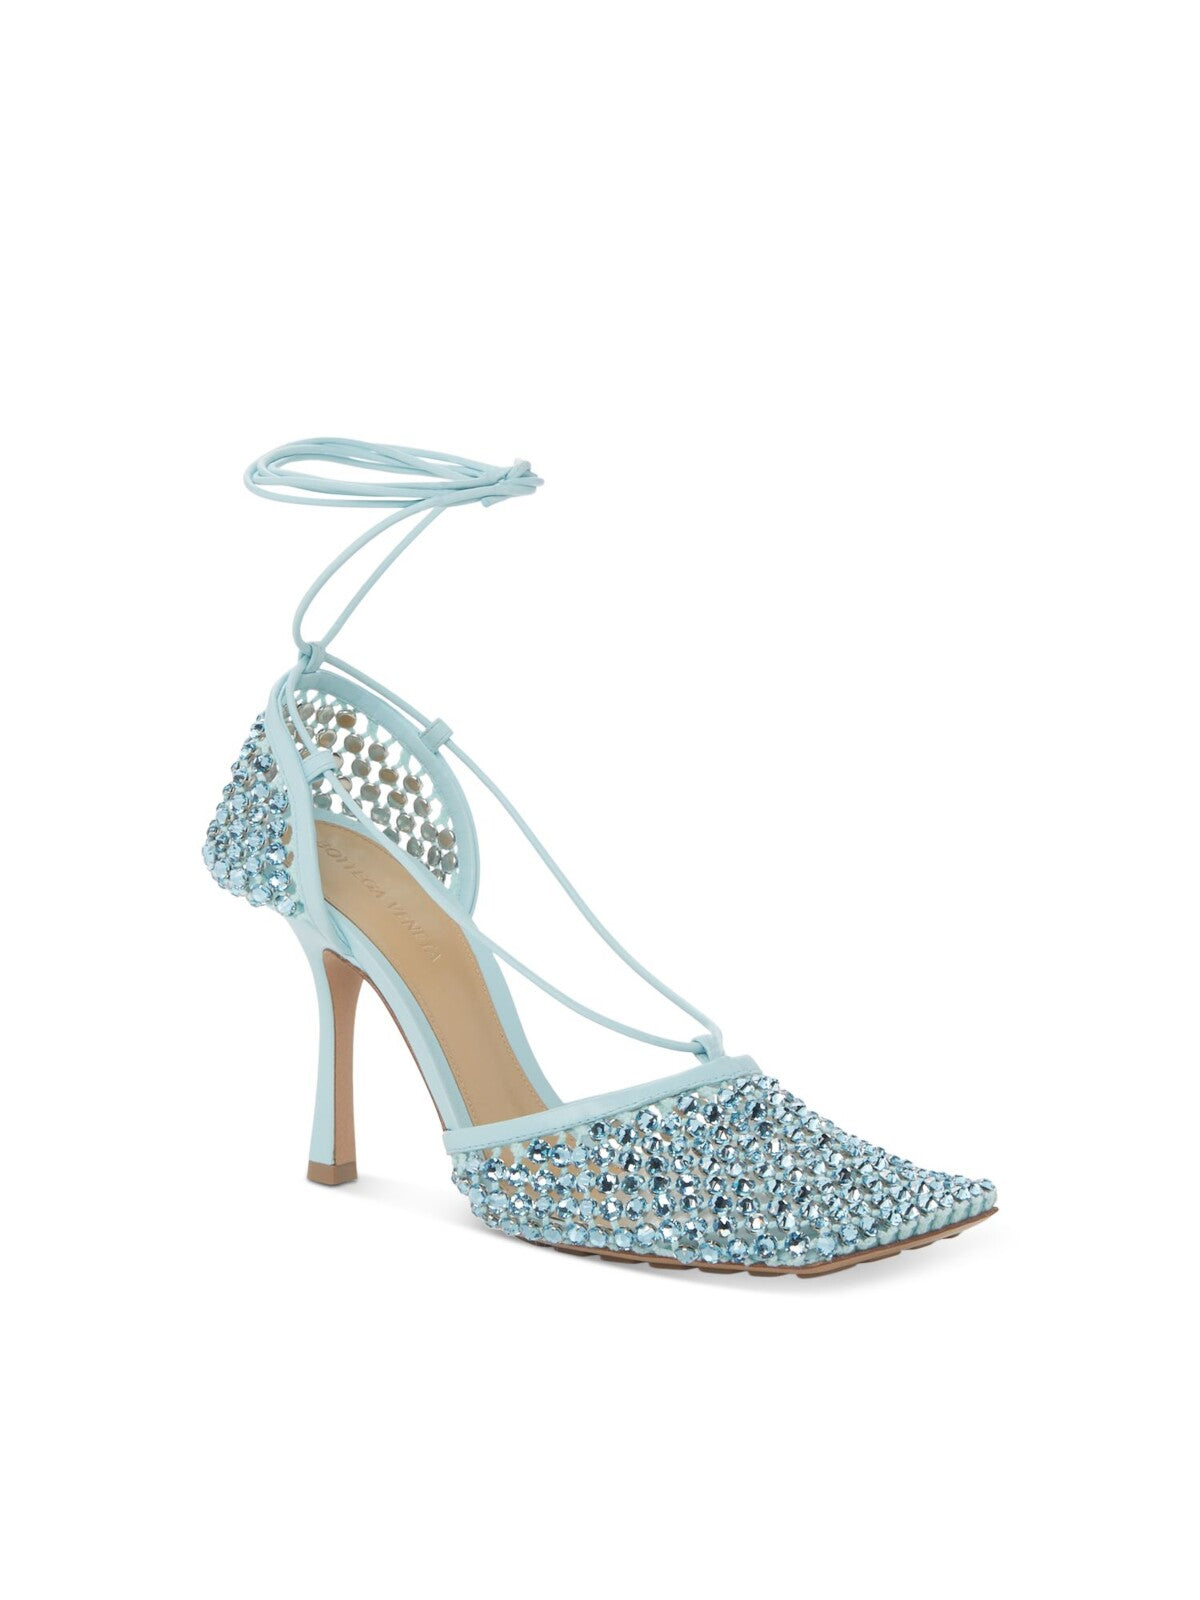 BOTTEGA VENETA Womens Blue Tie Ankle Strap Embellished Square Toe Stiletto Slip On Leather Dress Pumps Shoes 37